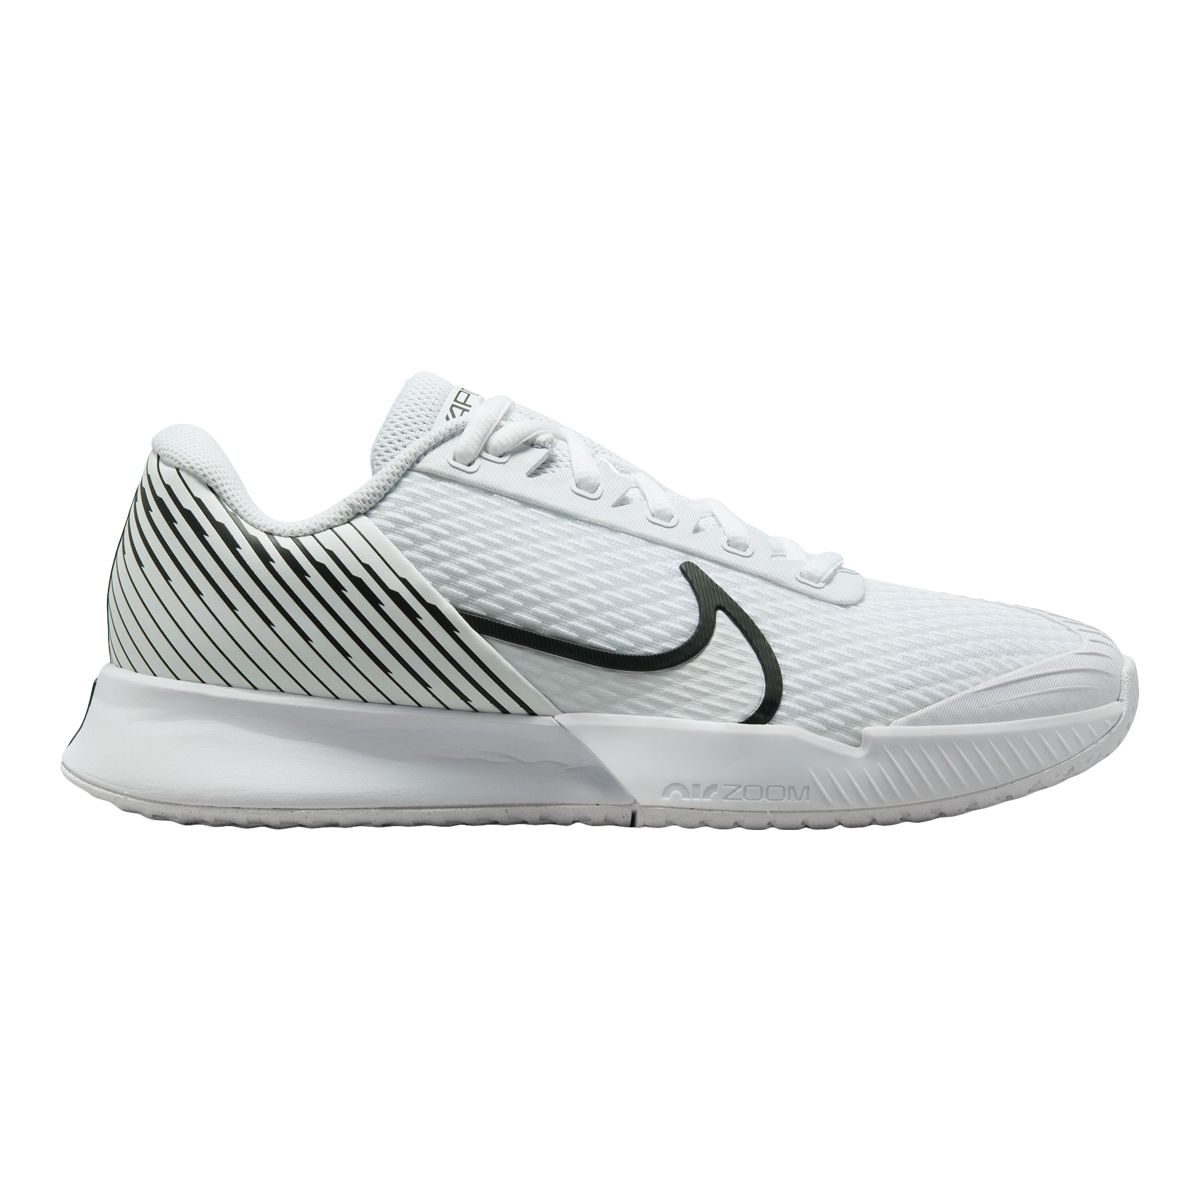 Nike Women's Vapor Pro 2 Tennis Shoes | SportChek